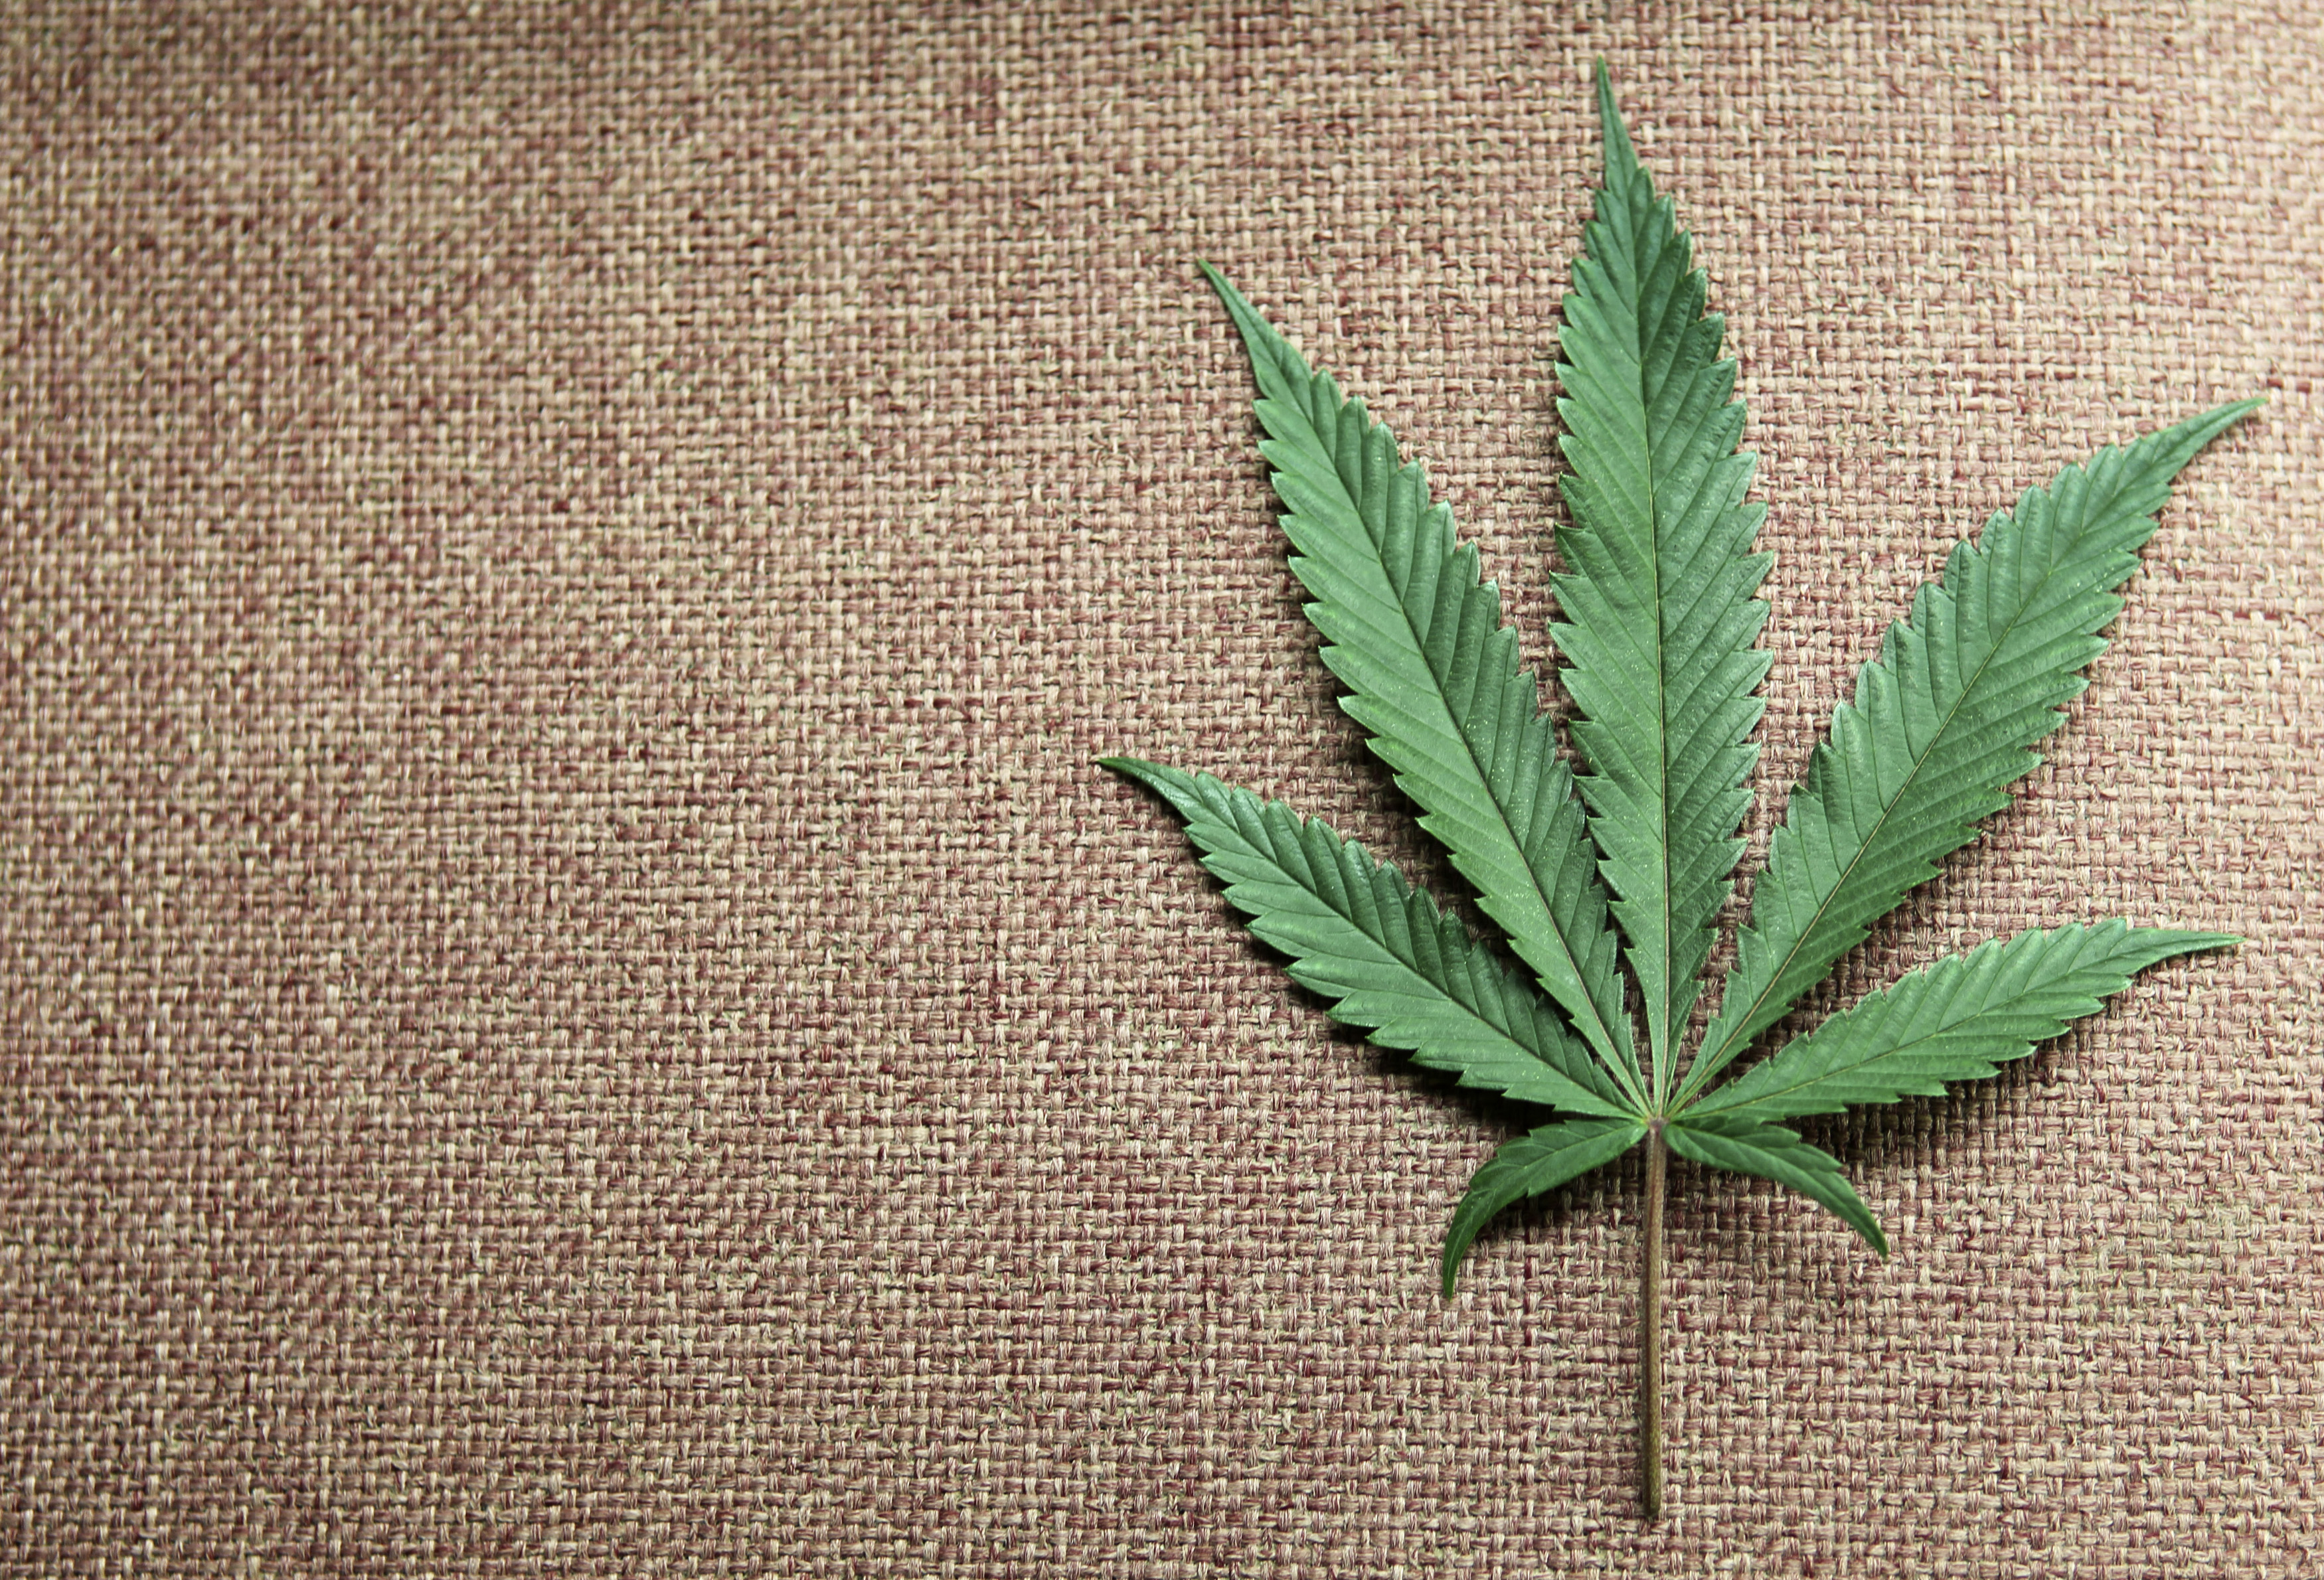 A marijuana leaf is displayed at Canna Pi medical marijuana dispensary in Seattle, Washington. REUTERS/Anthony Bolante